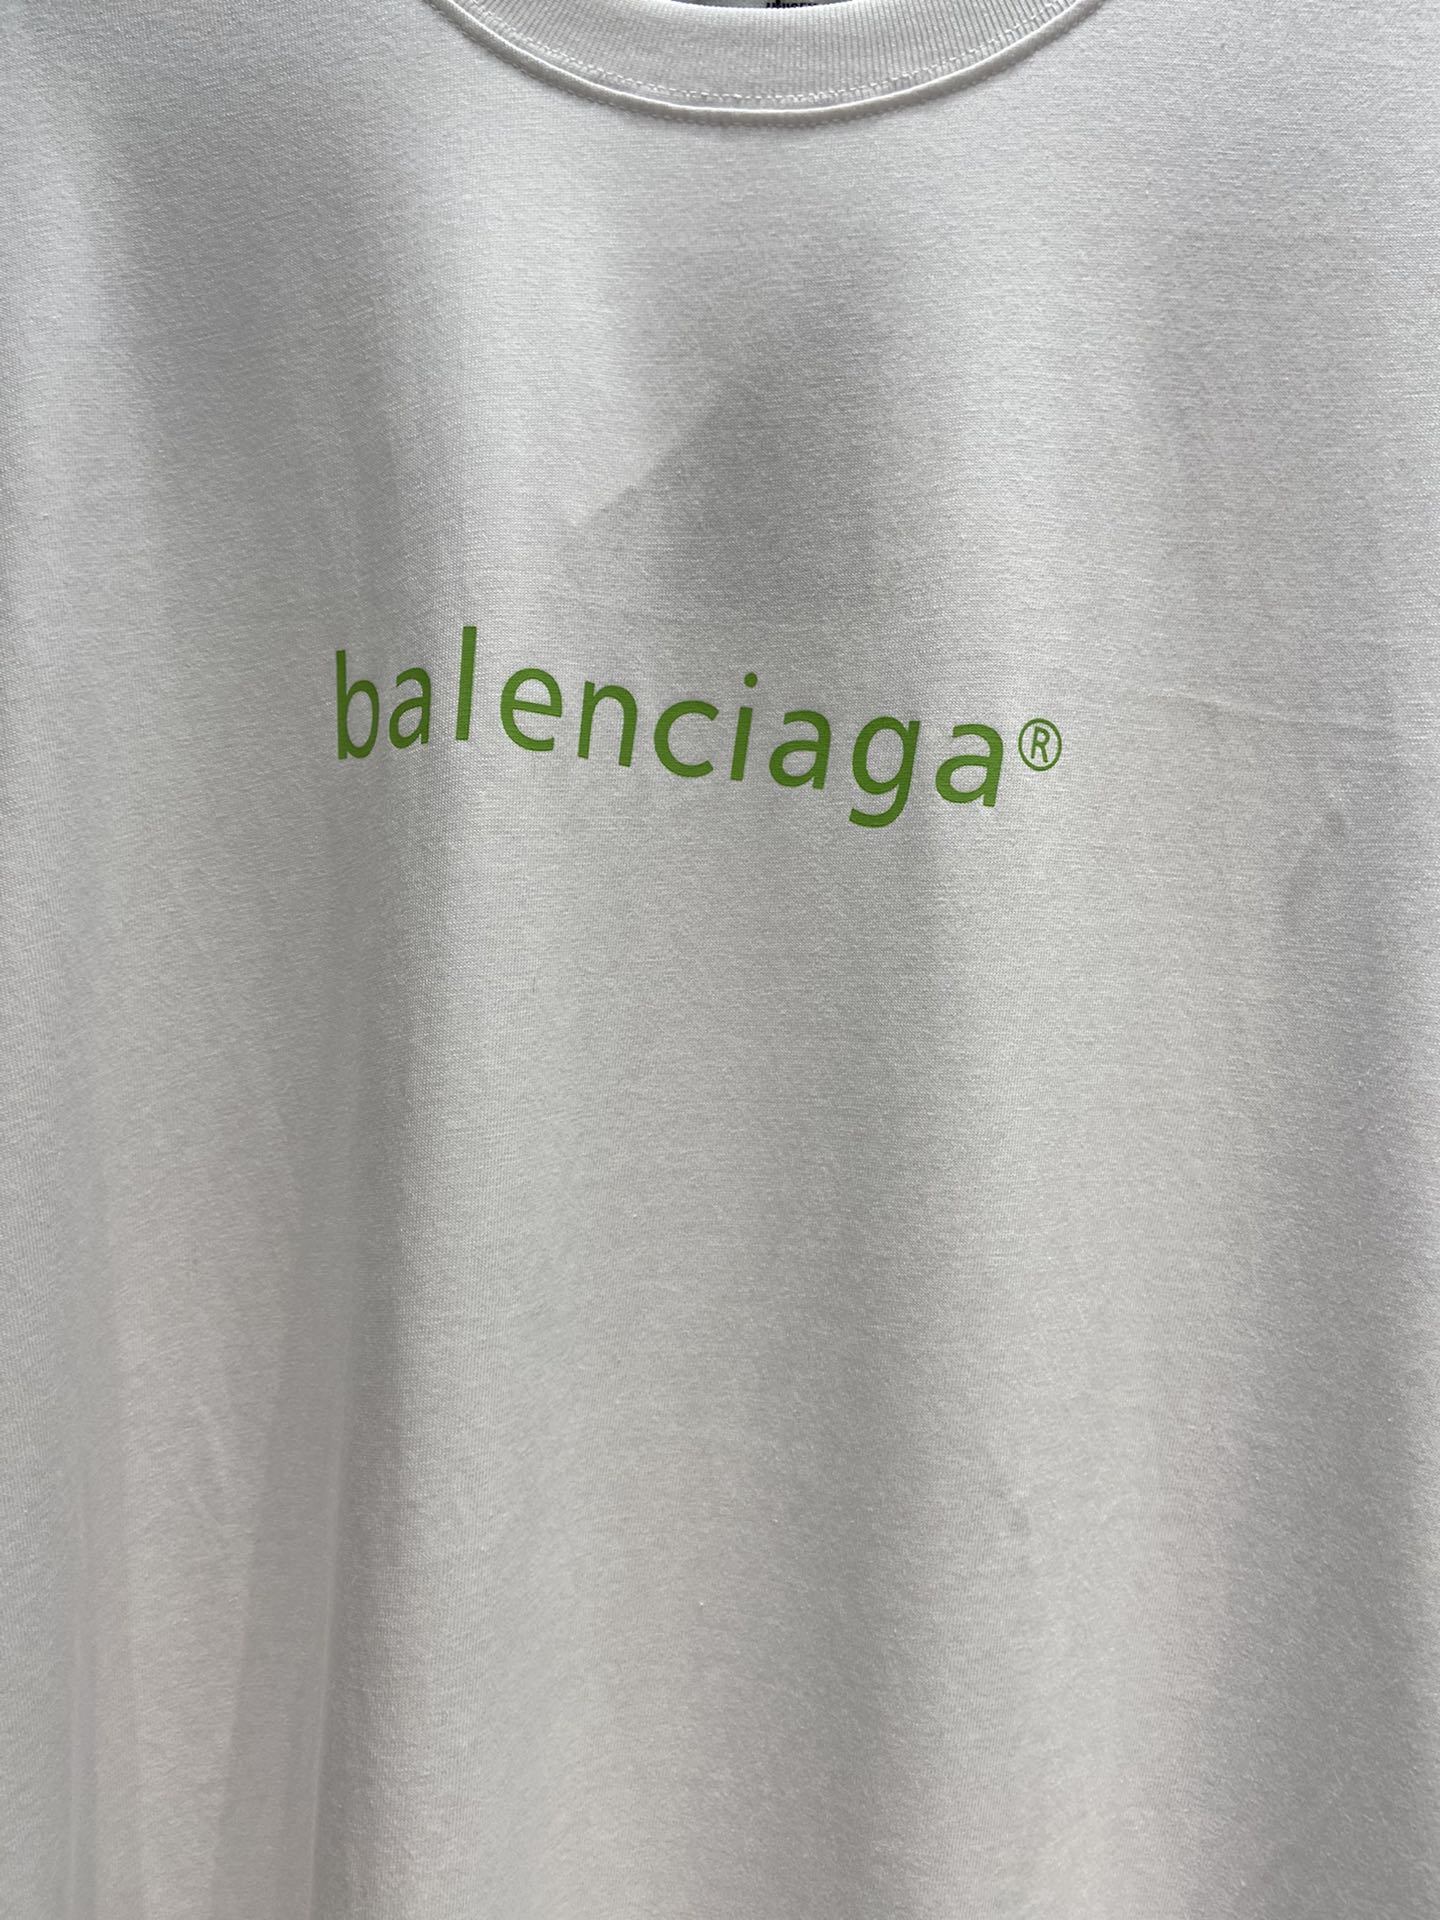 Balenciaga T-Shirt New Copyright Medium Fit